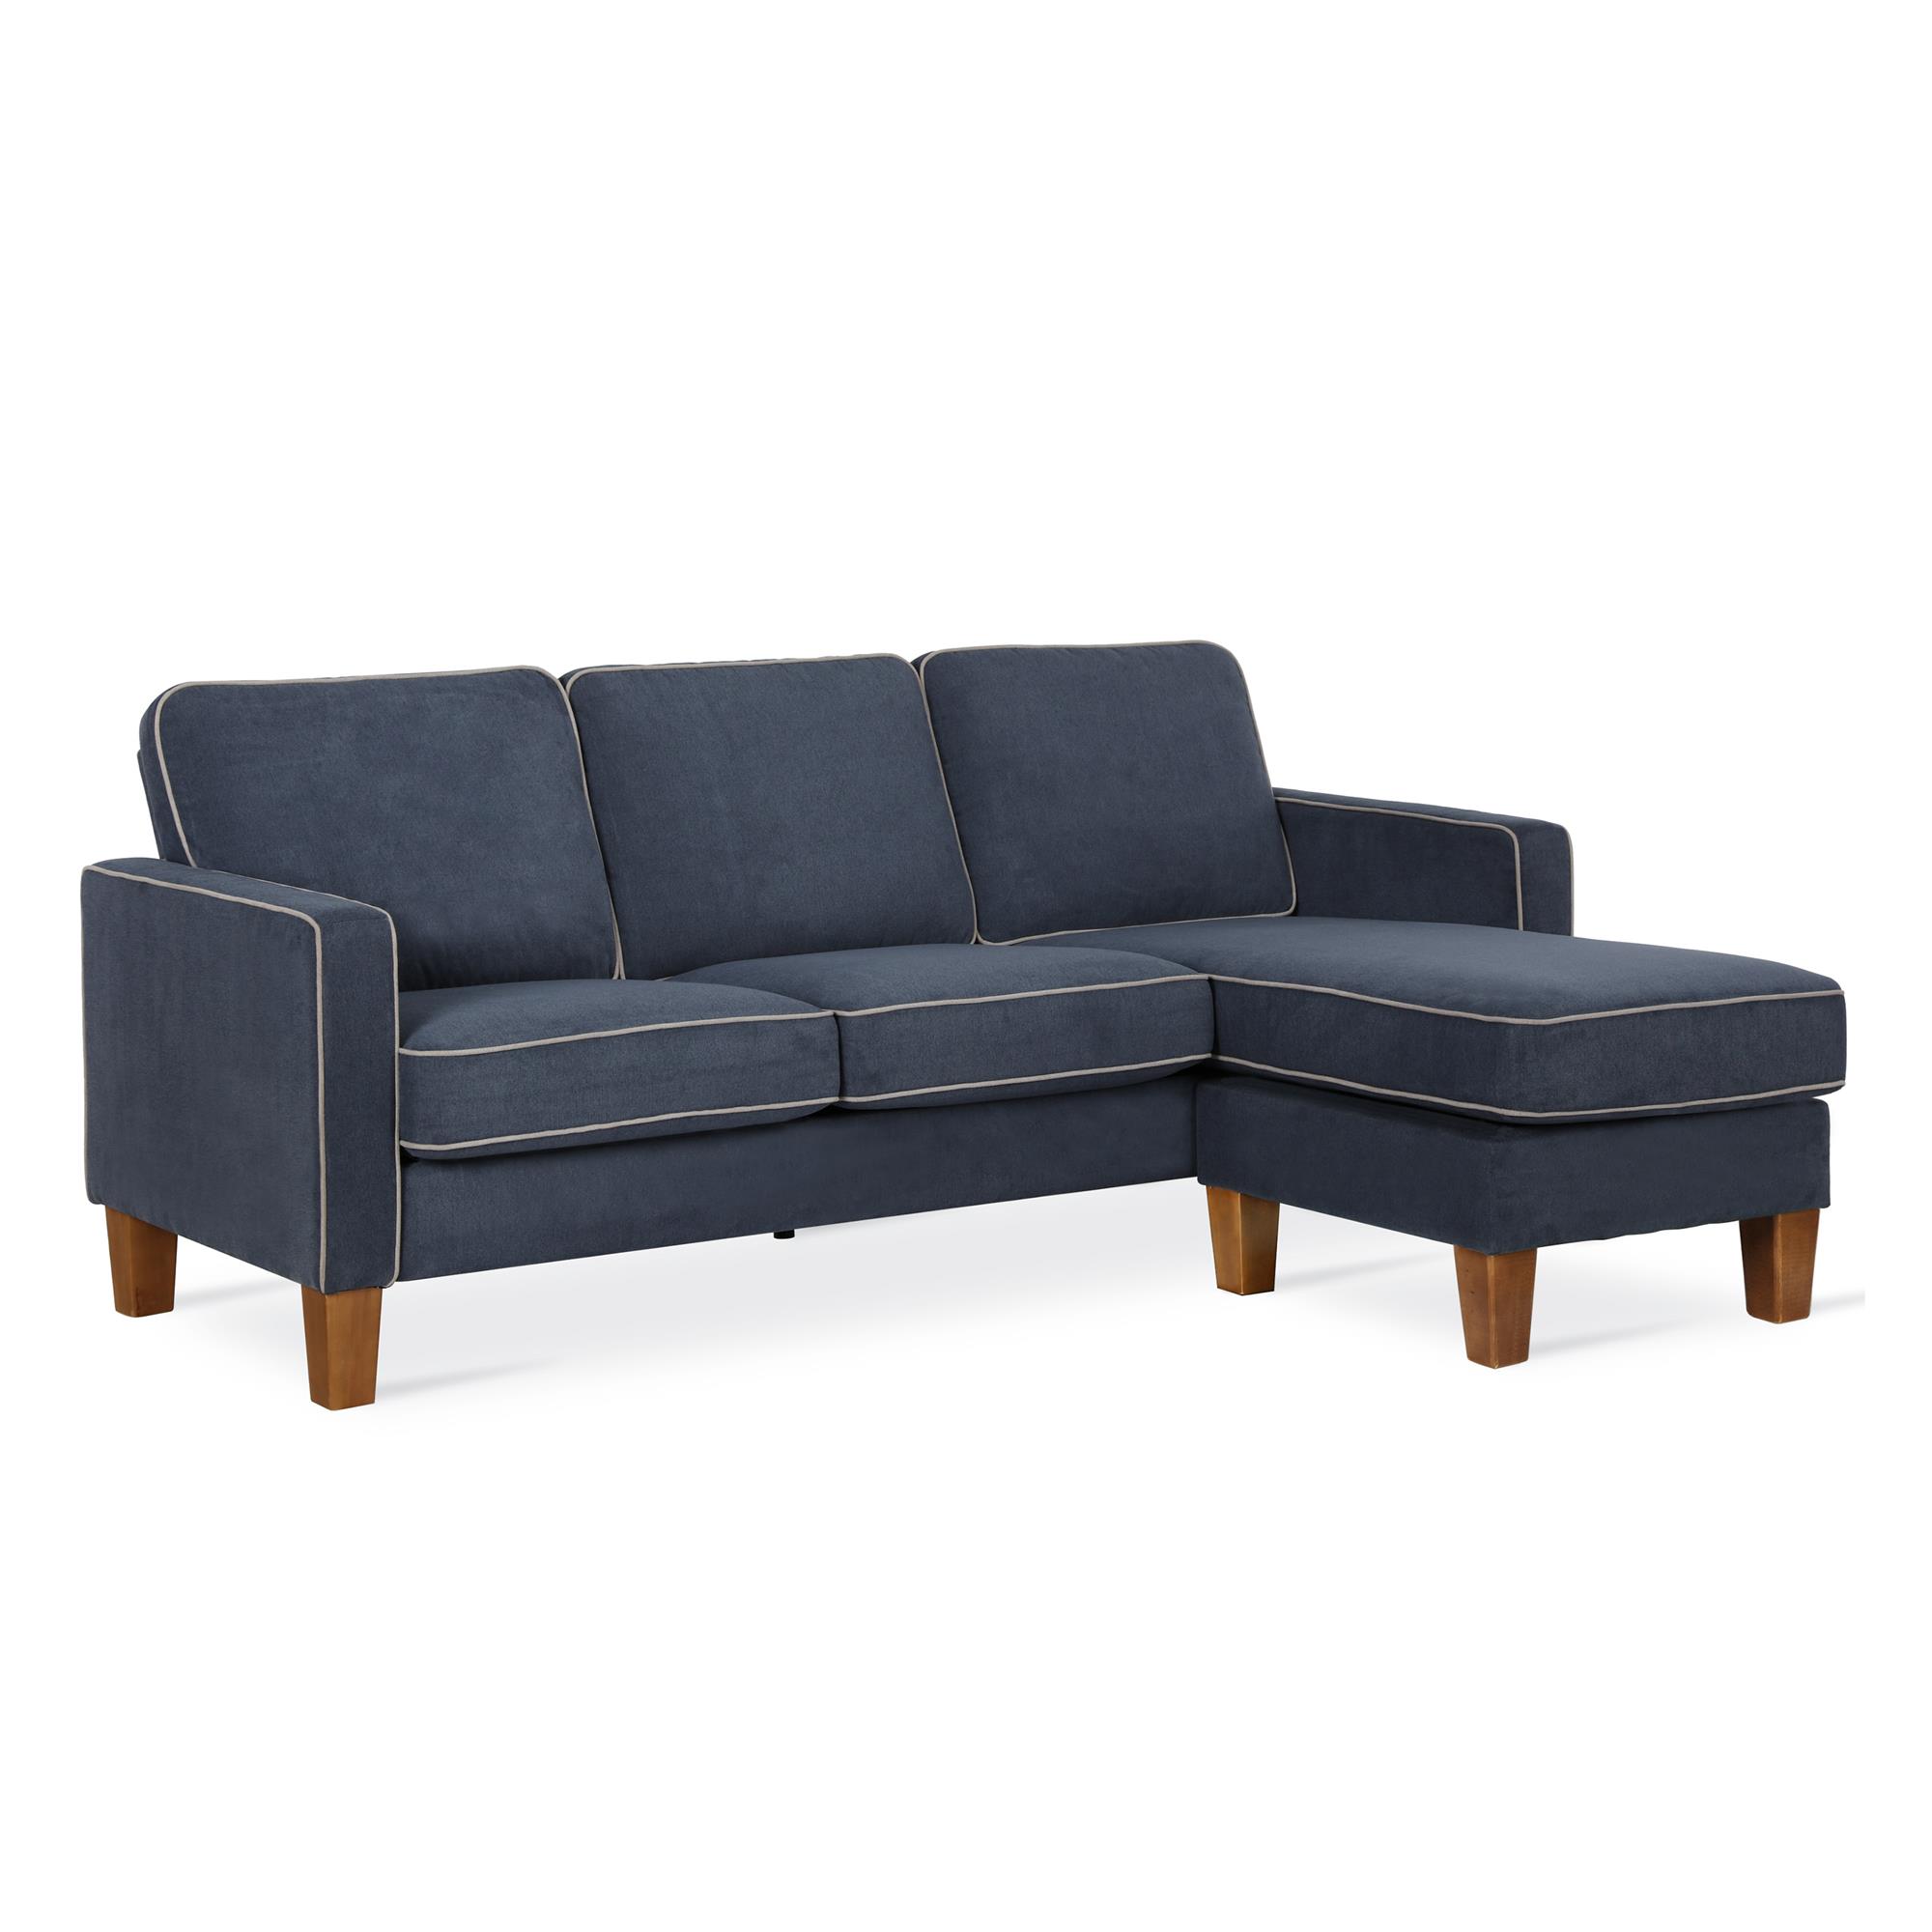 Novogratz Bowen Sectional Sofa with Contrast Welting, Blue, (Blue) - image 1 of 10